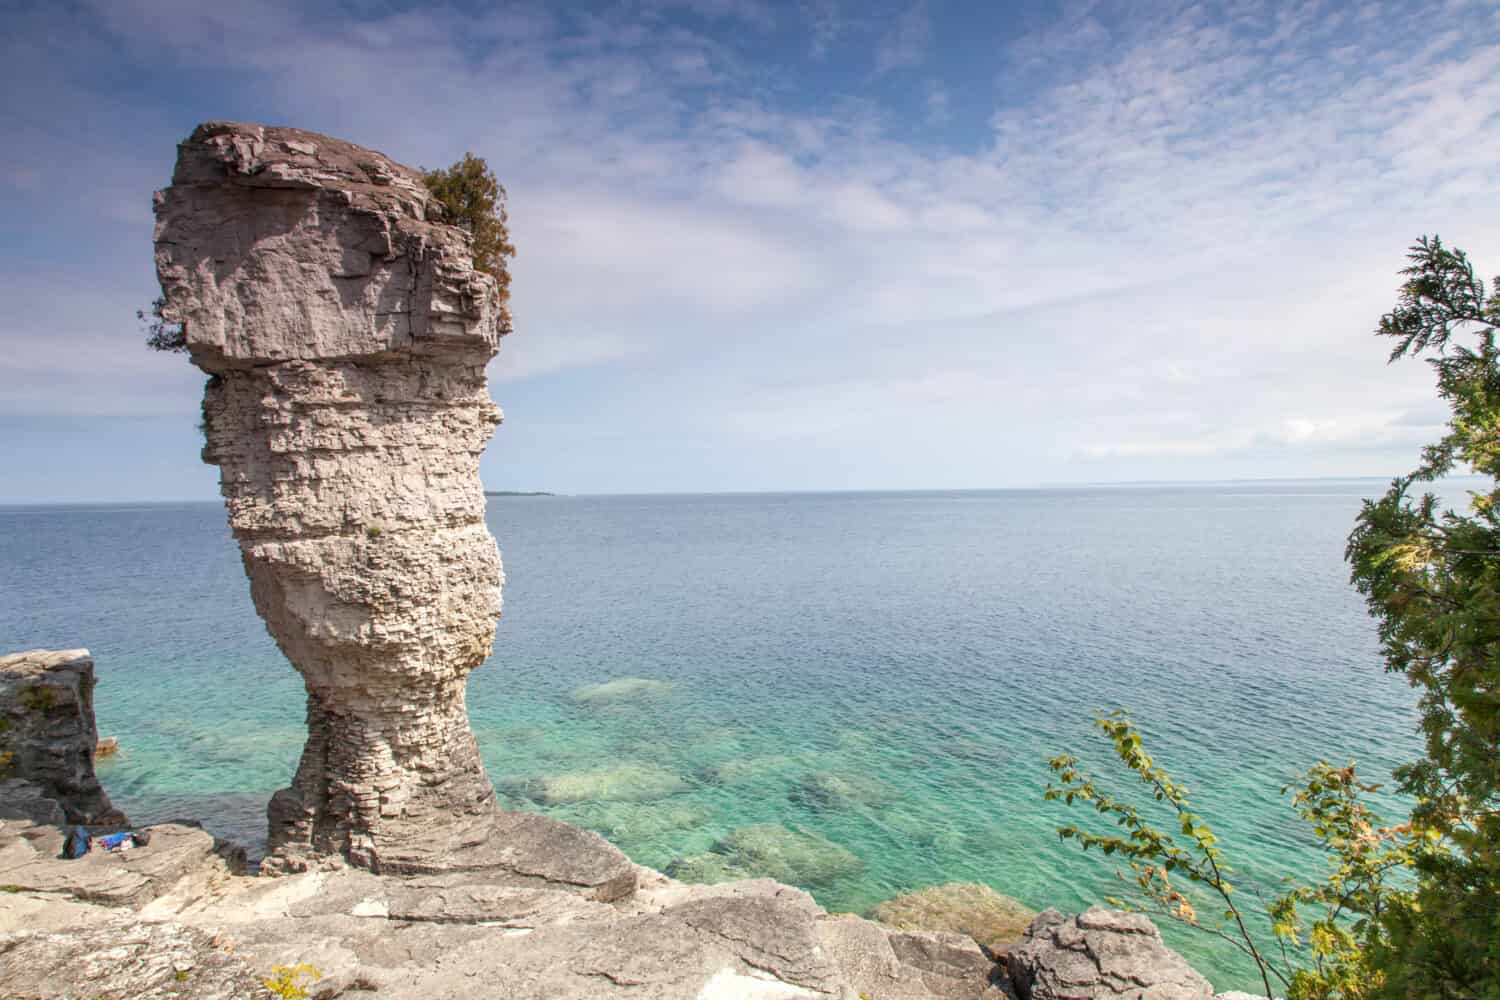 Rock formations at the coast, Flowerpot Island, Georgian Bay, Tobermory, Ontario, Canada